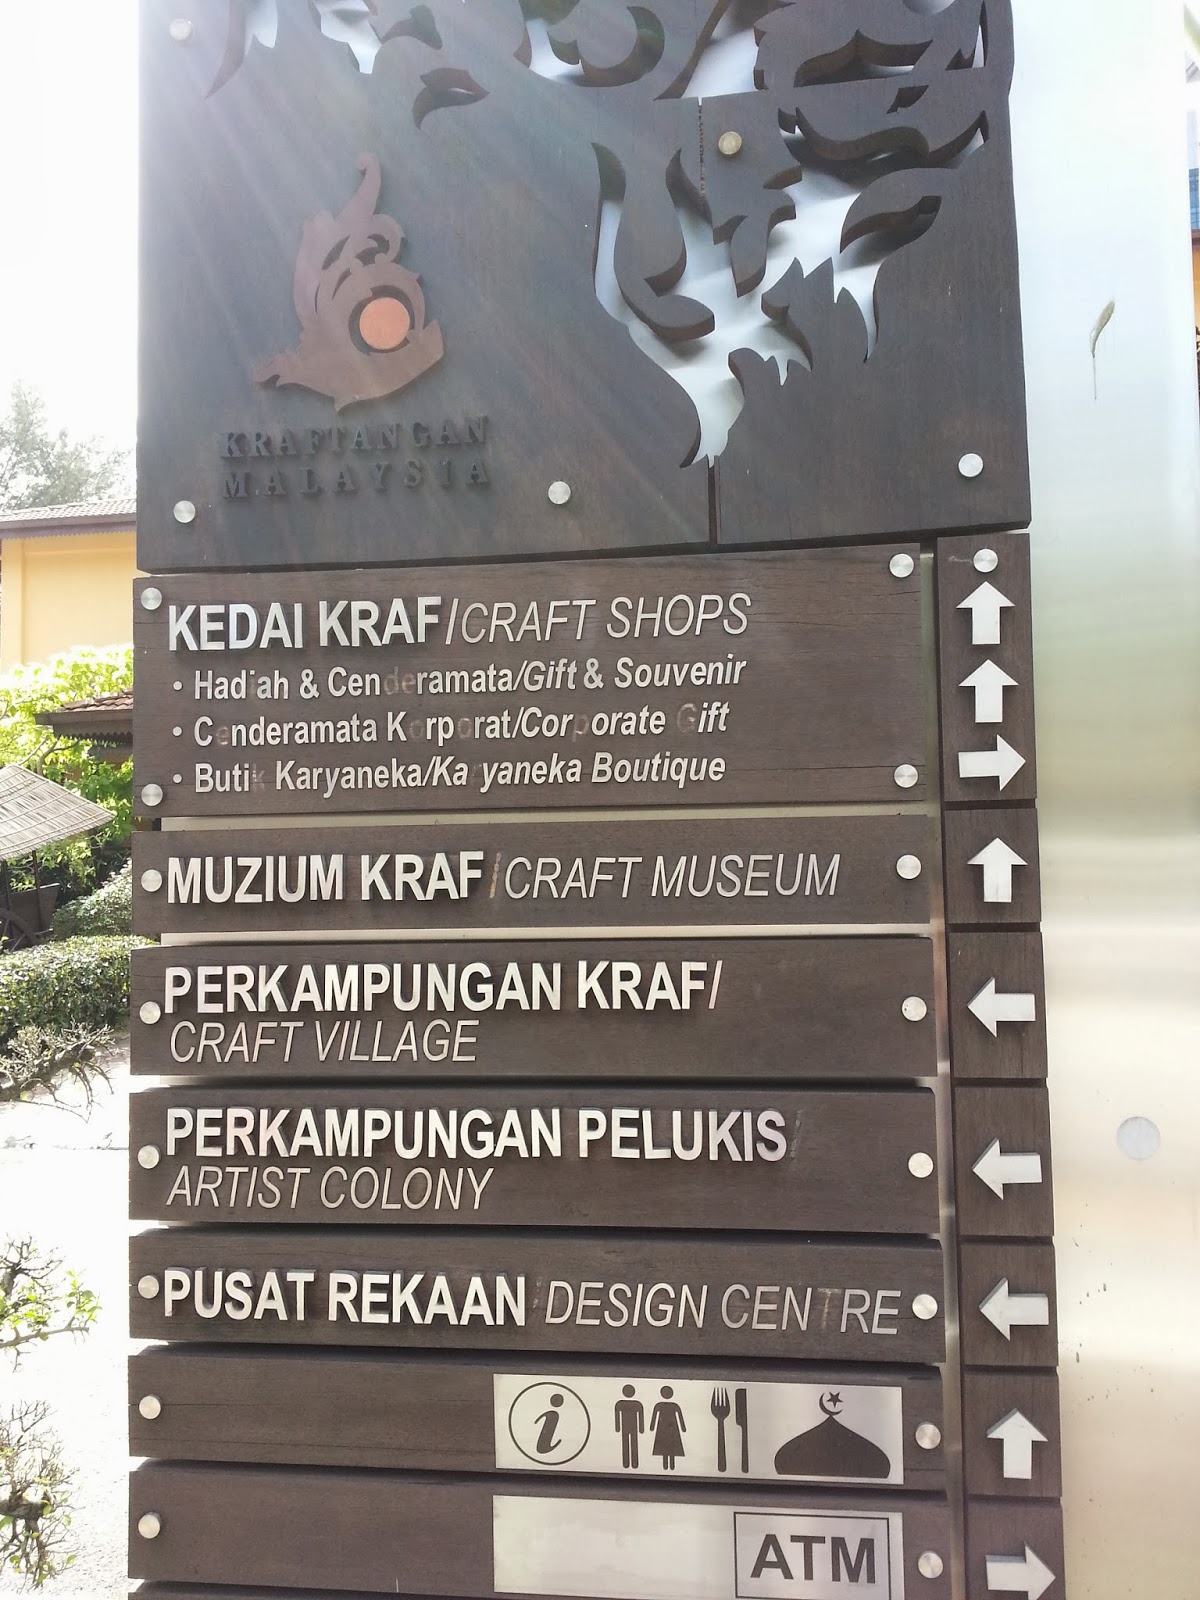 Kompleks Kraf Kuala Lumpur...or Kuala Lumpur Craft Complex ...